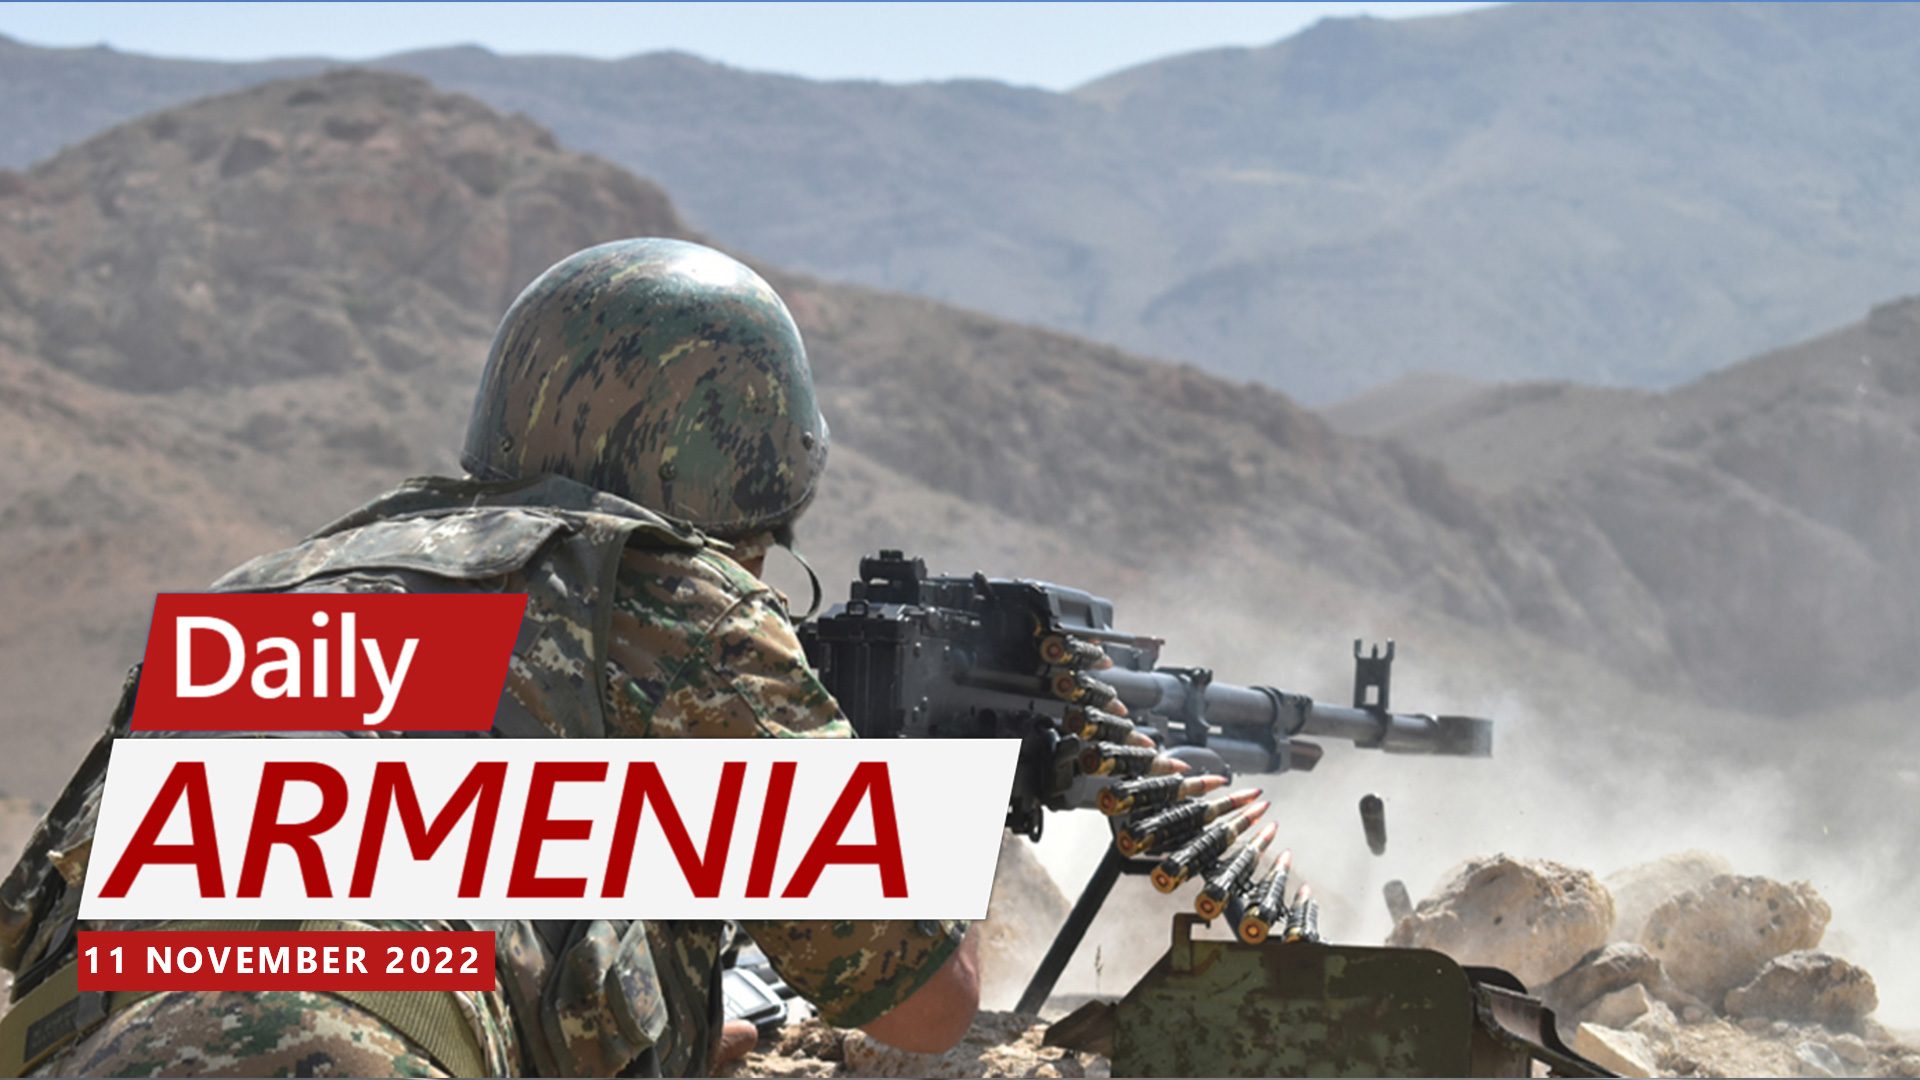 Azerbaijani troops fire mortars on Armenian positions, despite pledge not to use force